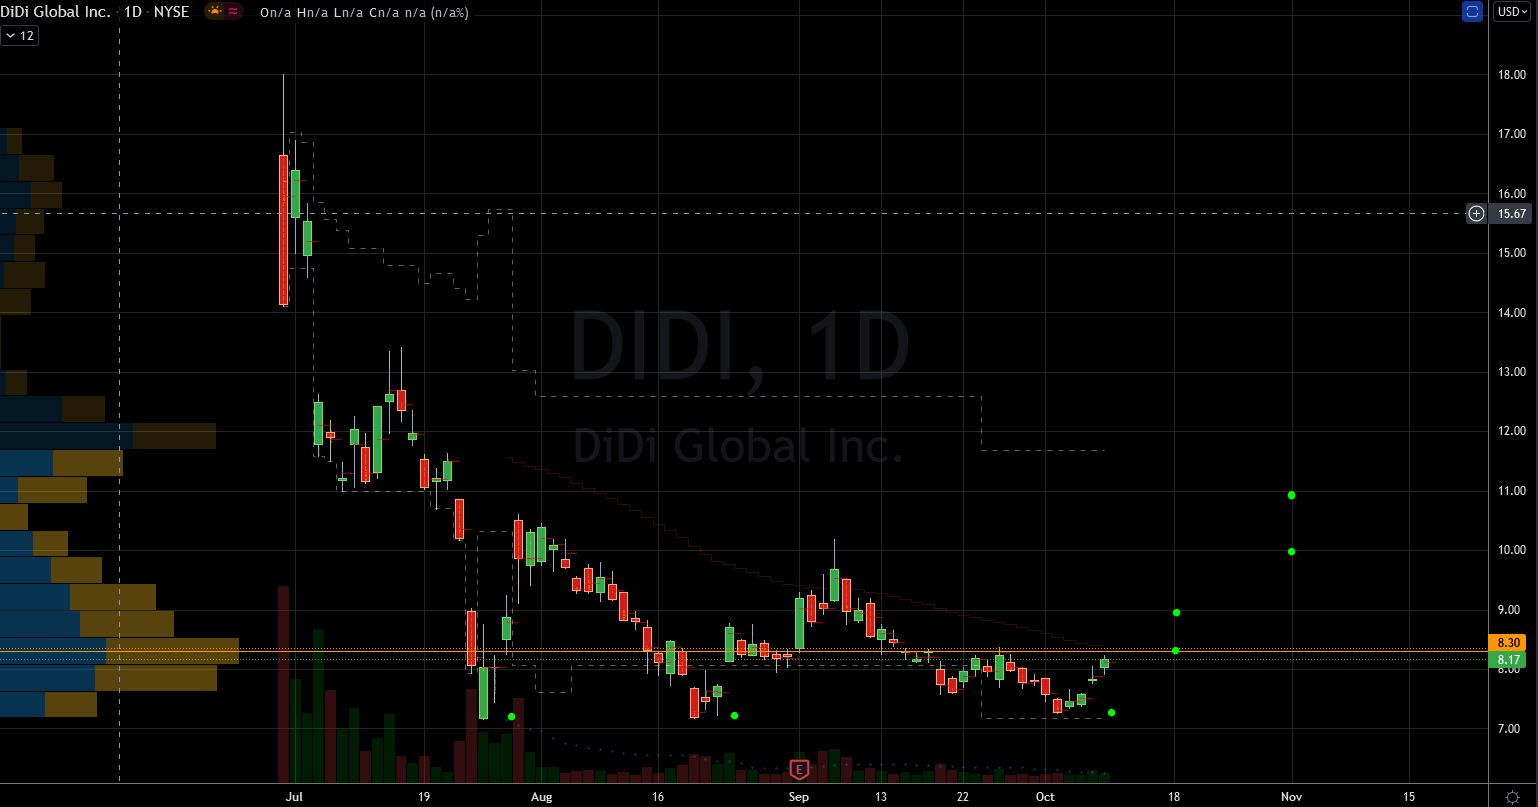 DIDI Stock Chart Showing 3 Bounces Setting Base